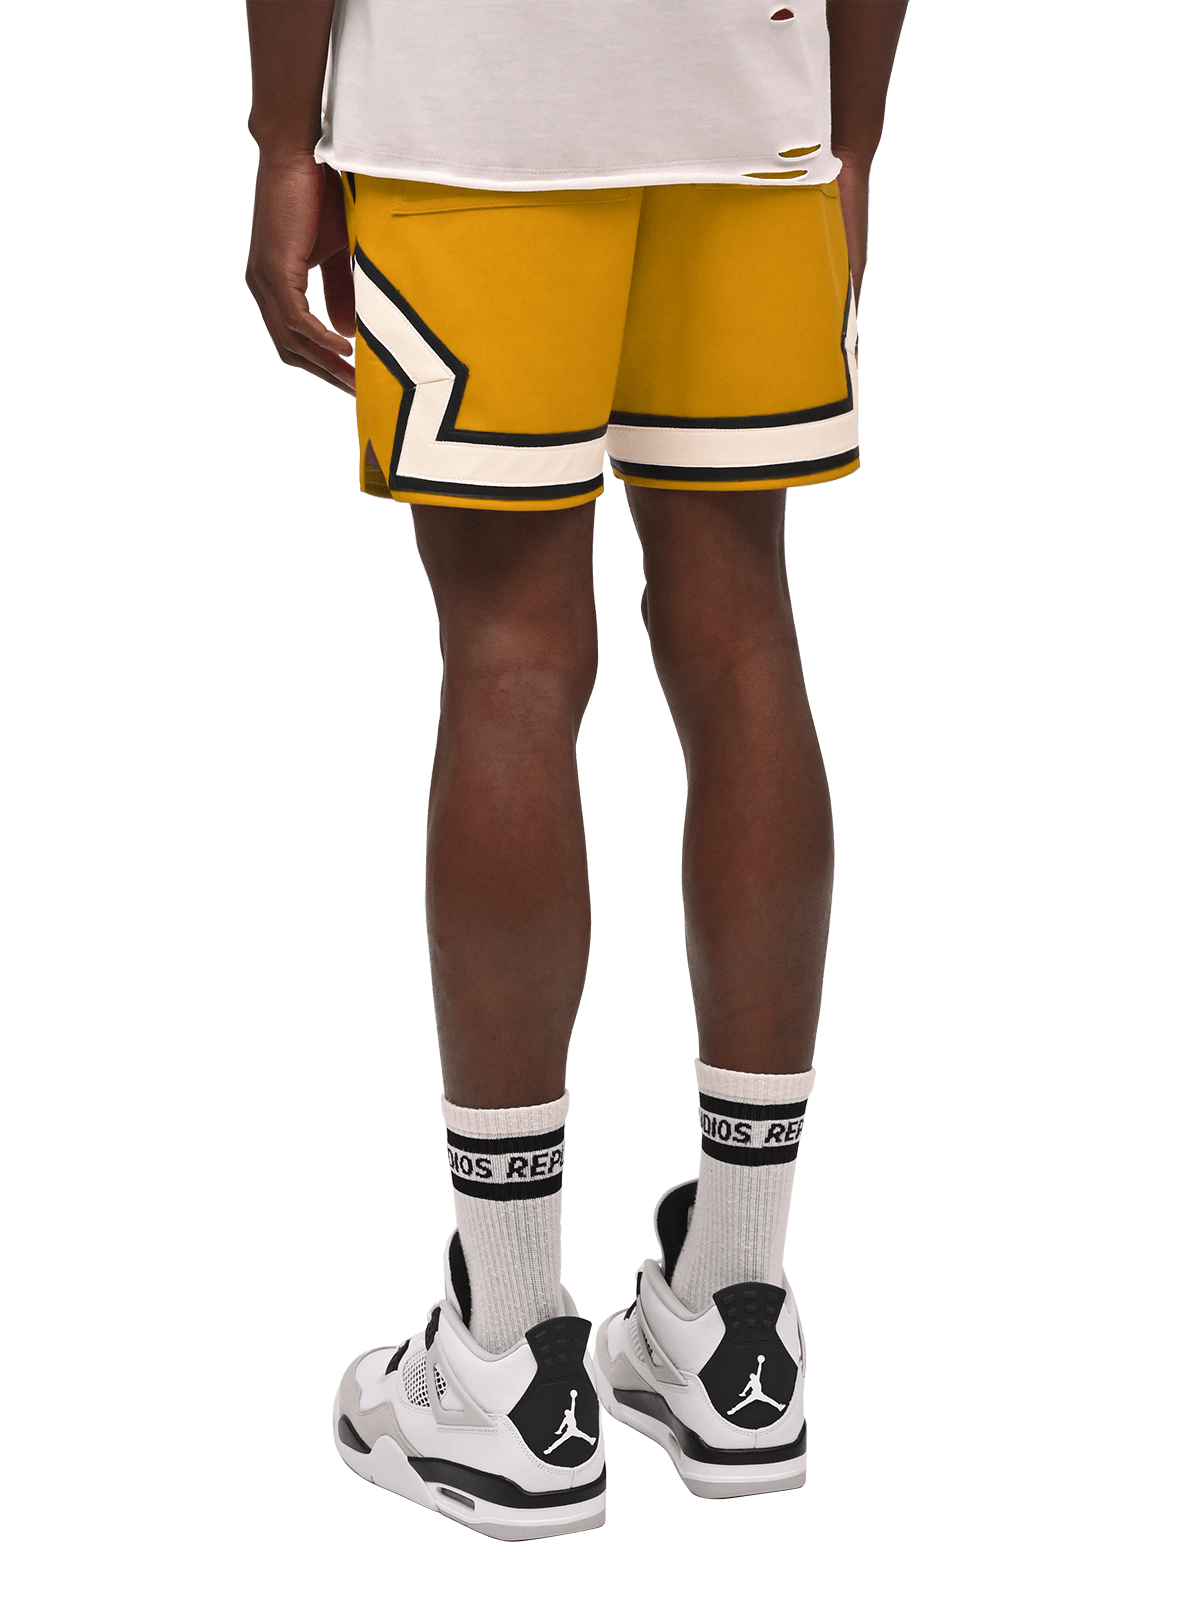 Leather Basketball Shorts - Mustard